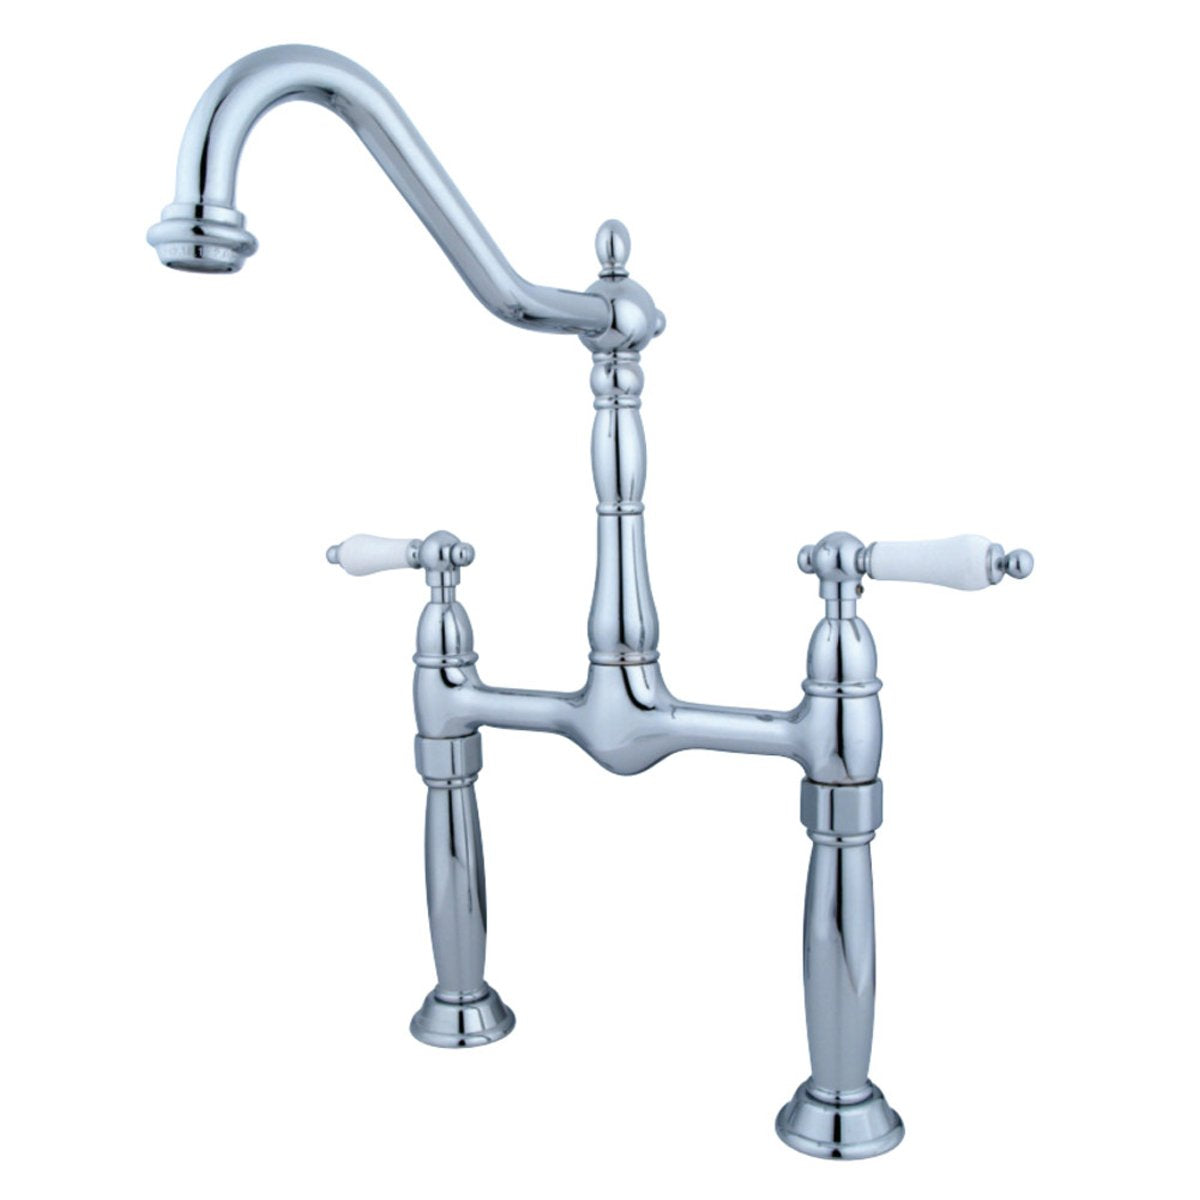 Kingston Brass Victorian Lever-Handle Vessel Sink Faucet